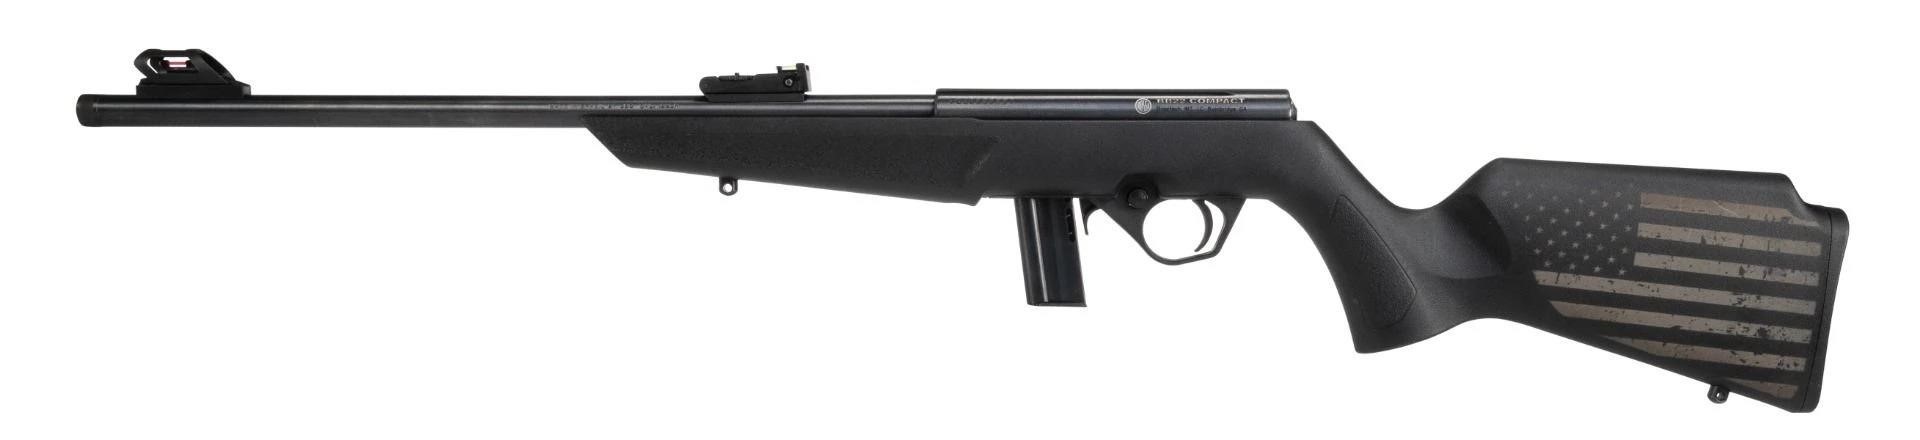 Rossi Rio Bravo EN01 Lever Action Rifle - .22 LR |